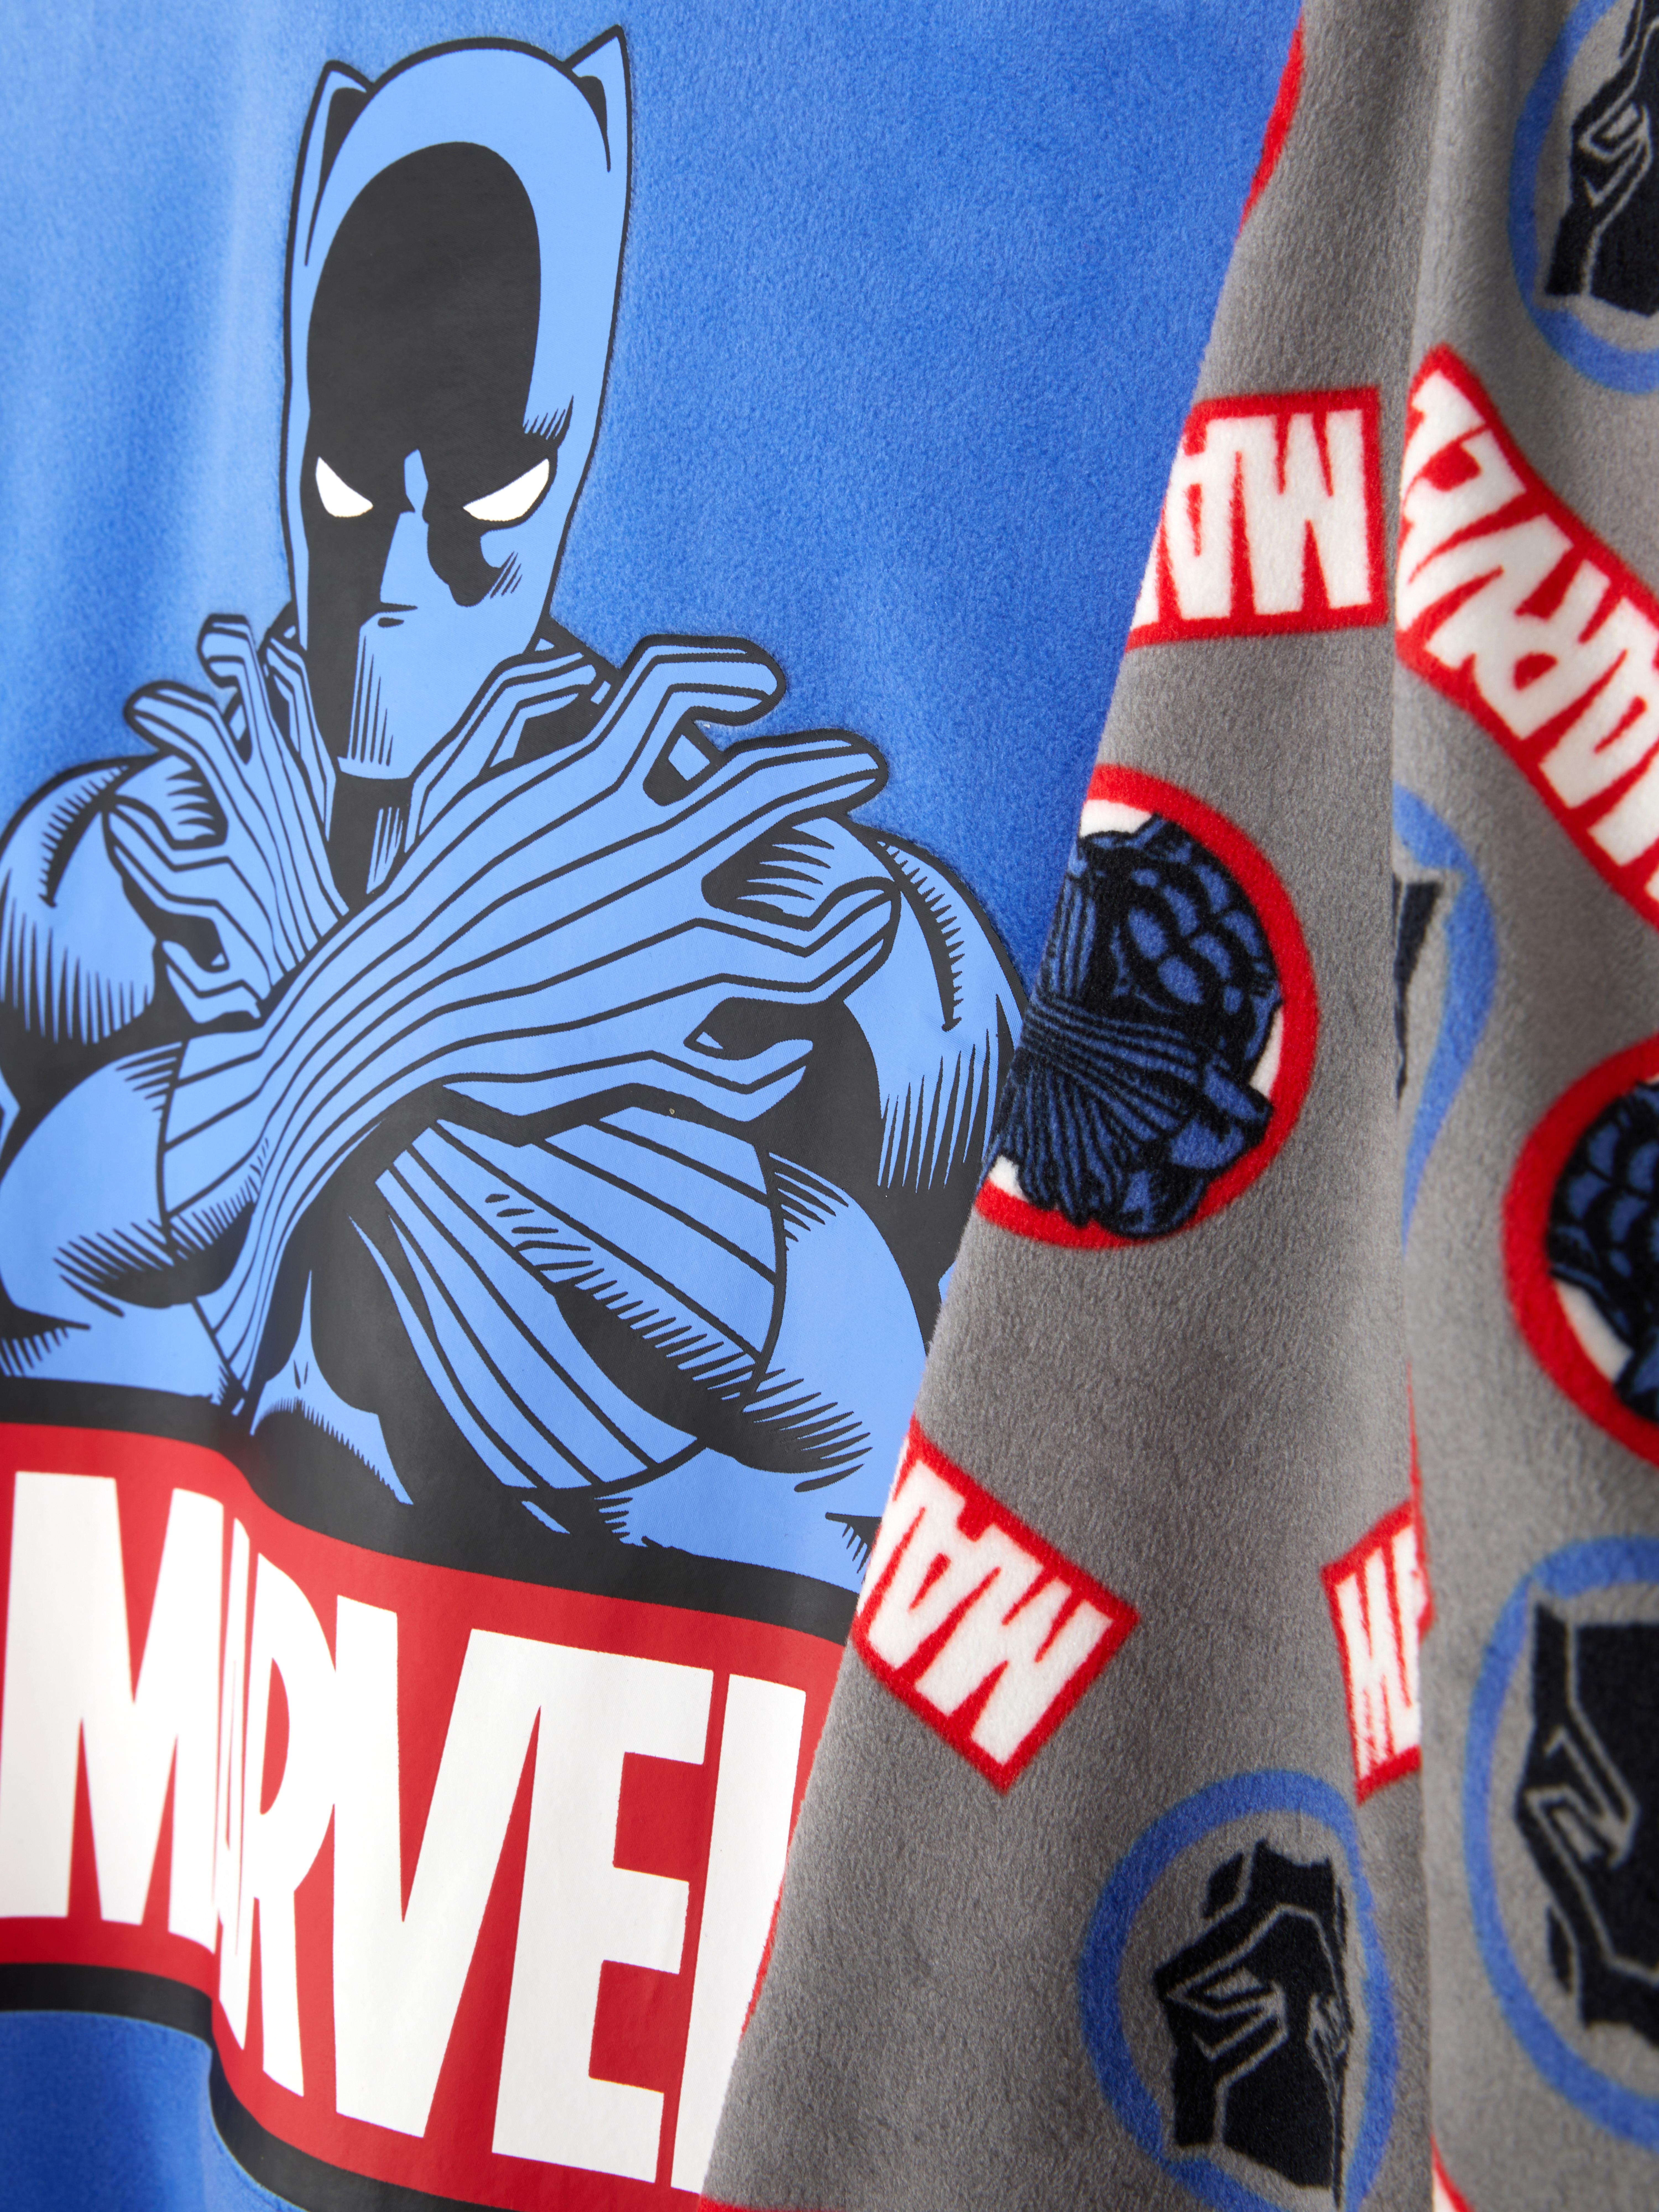 Pyjama Marvel Black Panther